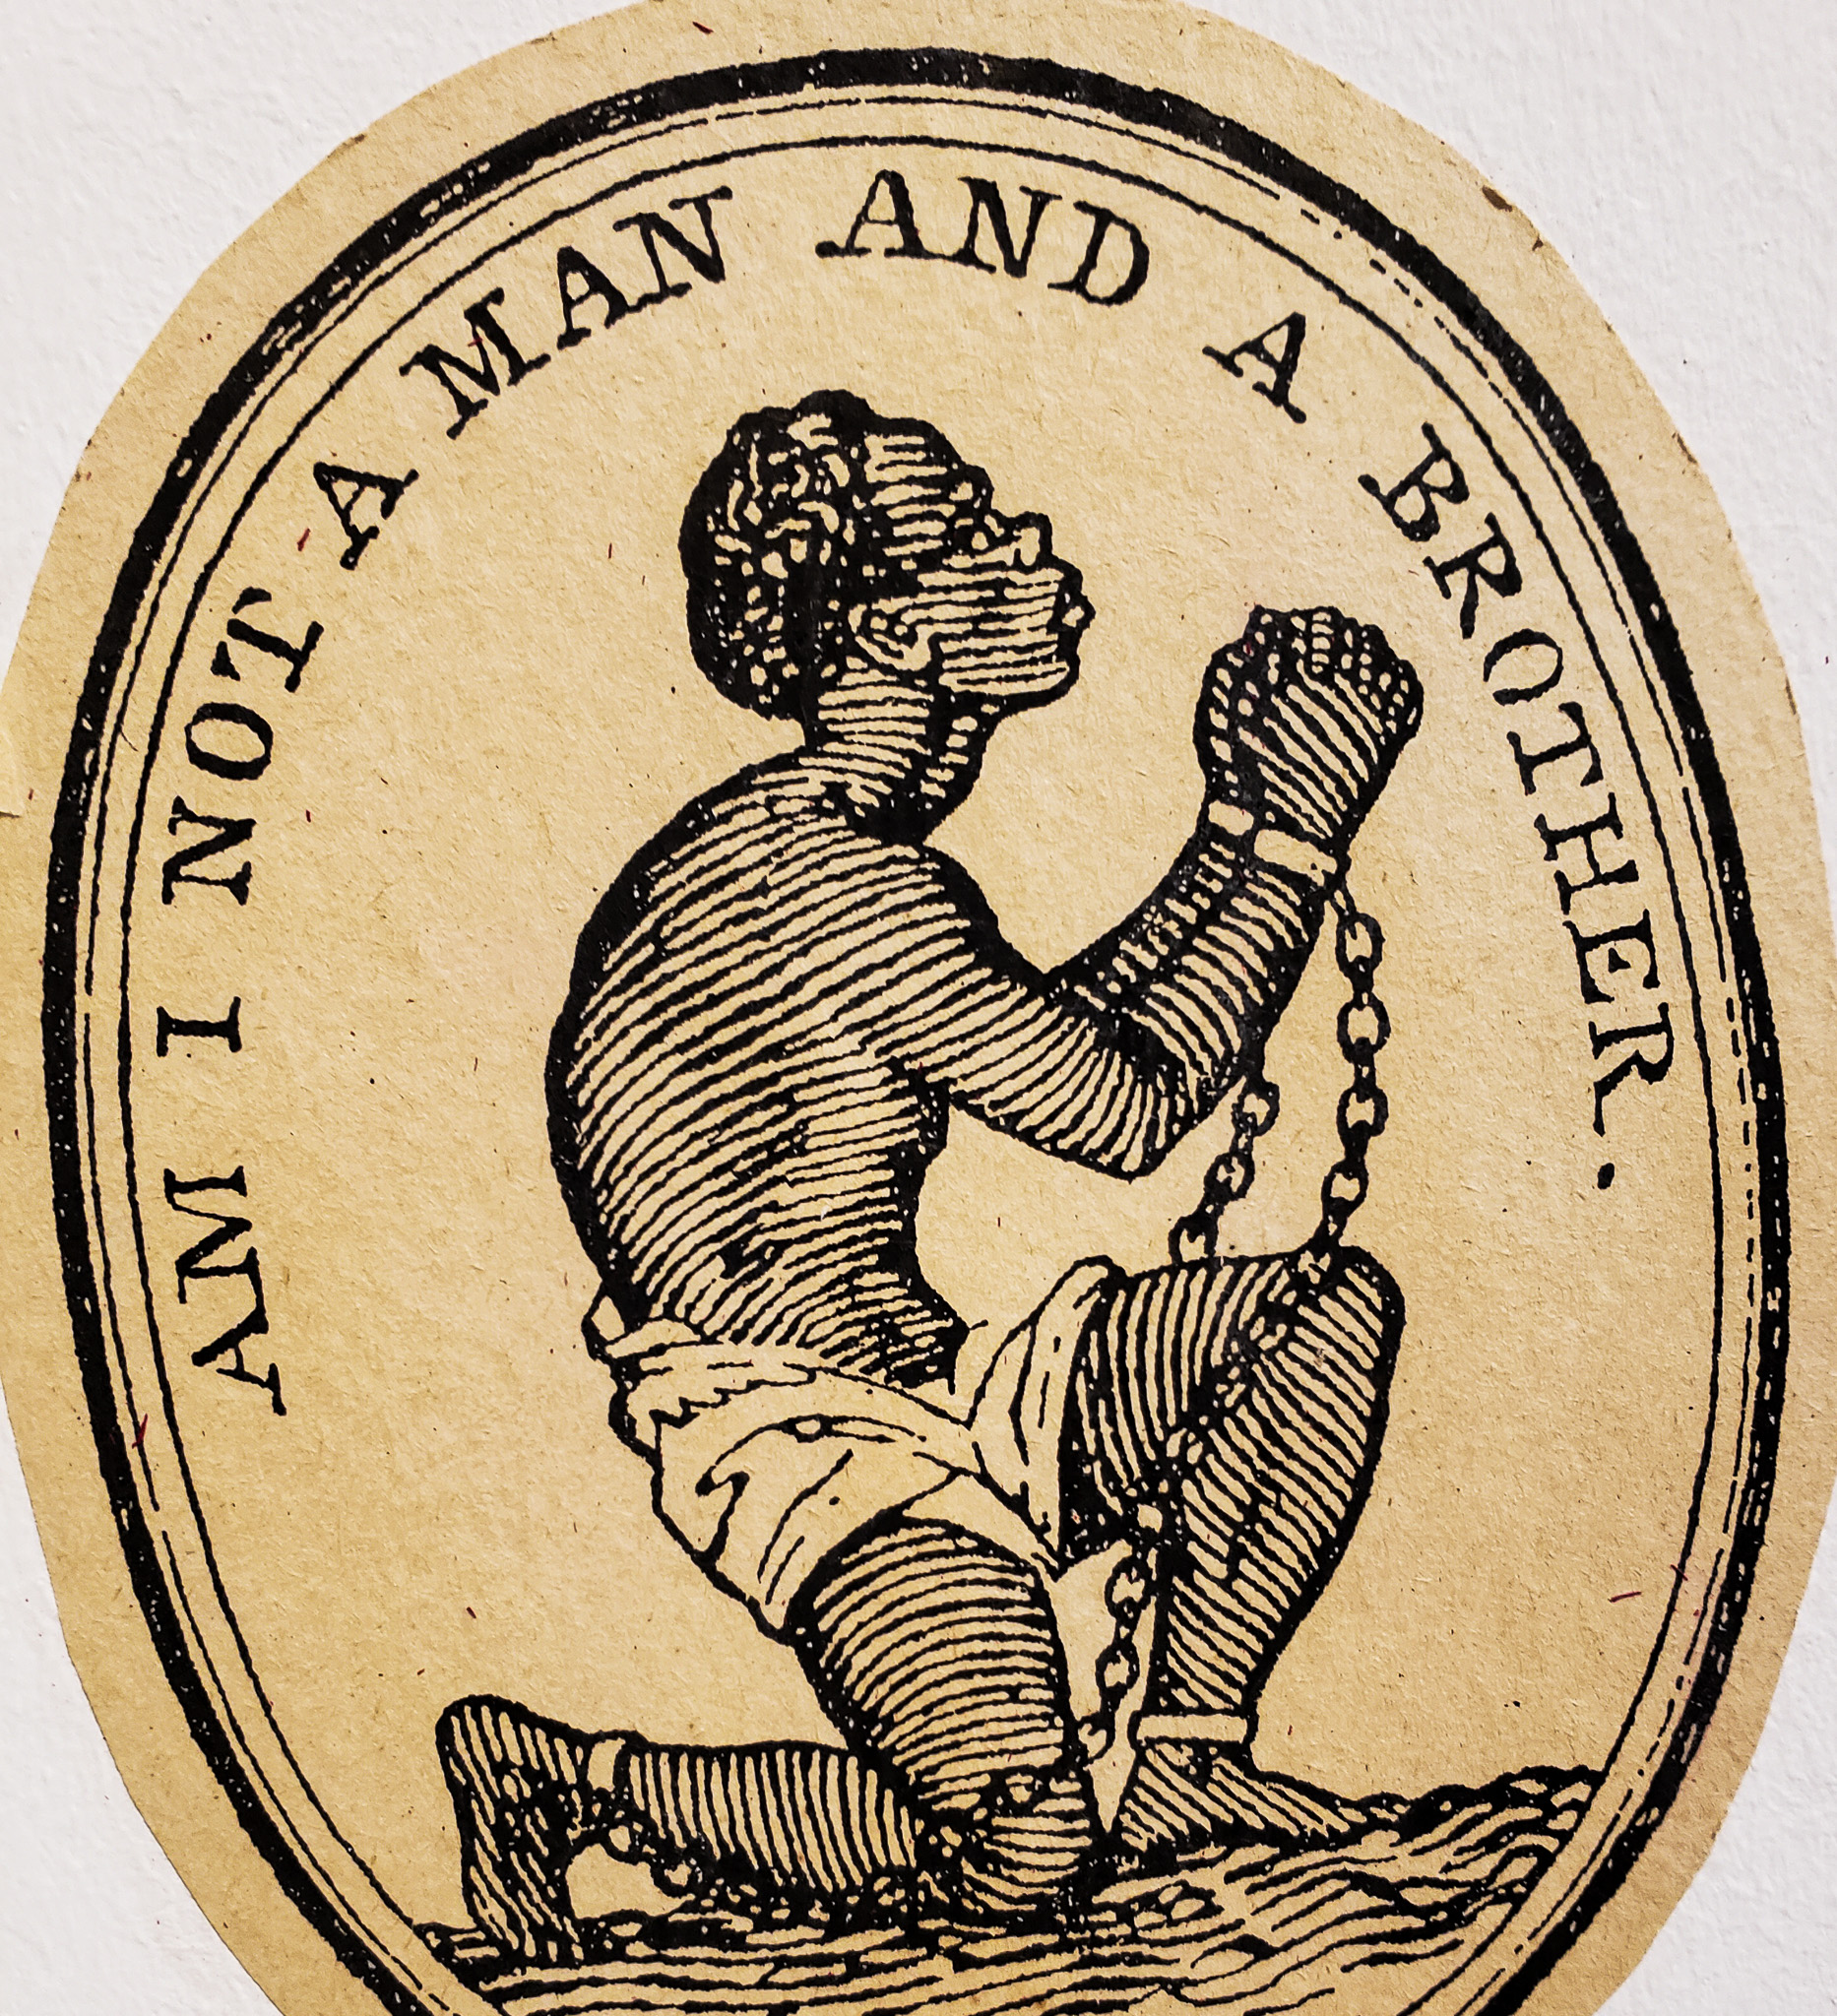 A depiction of slave